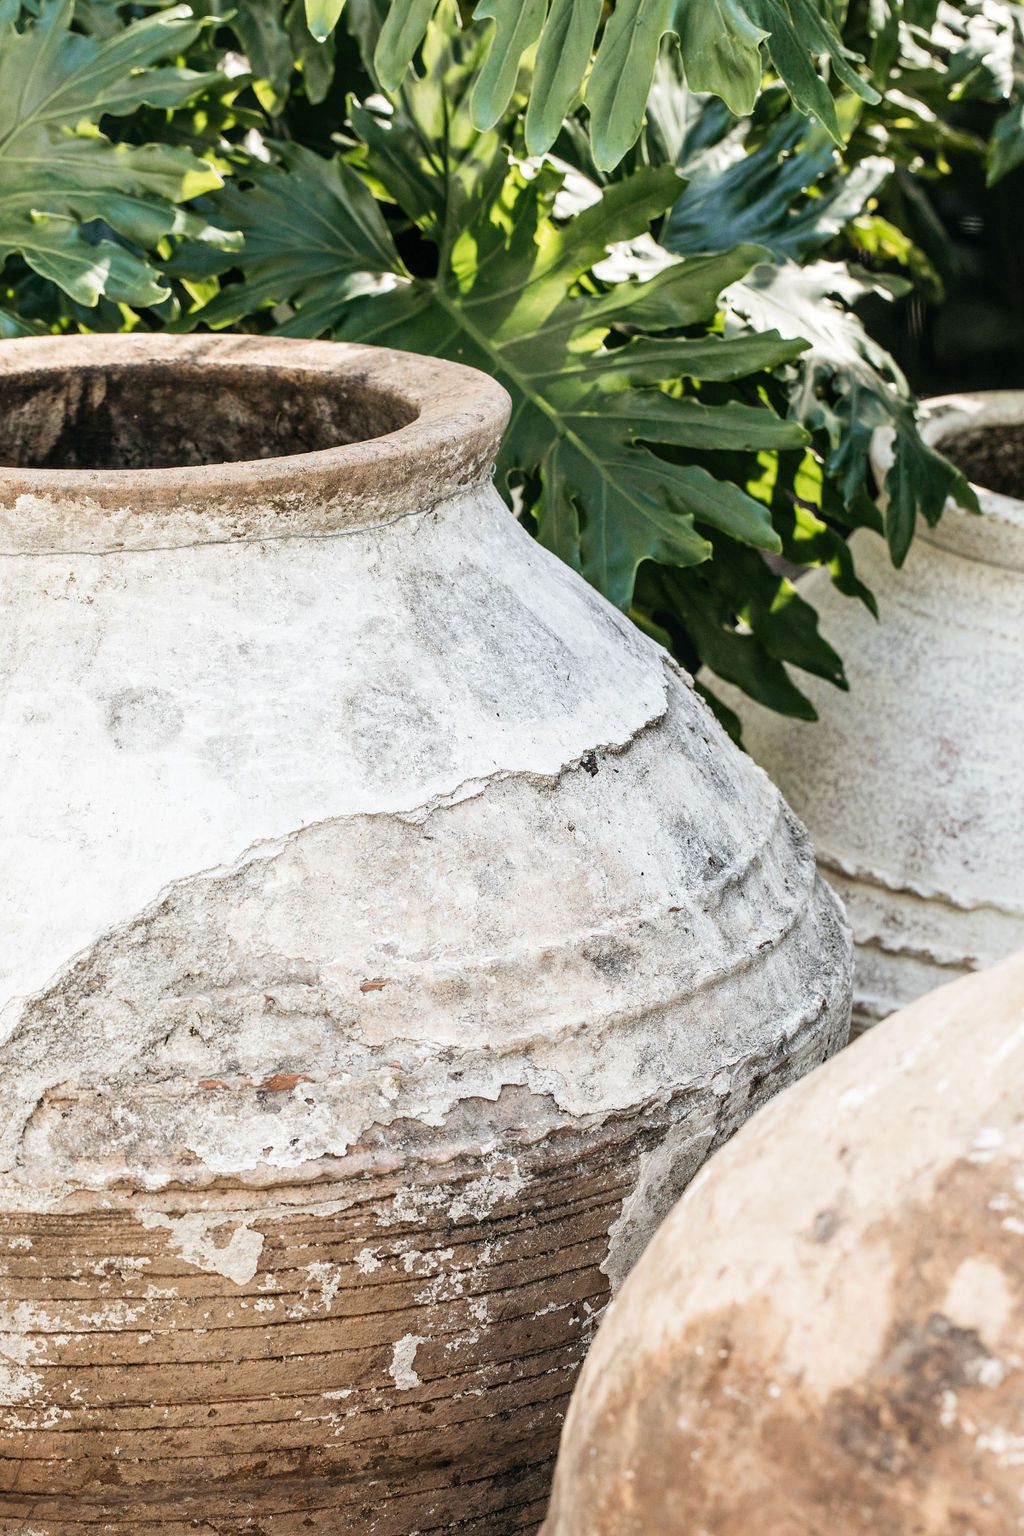 Large Terracotta Water Pot